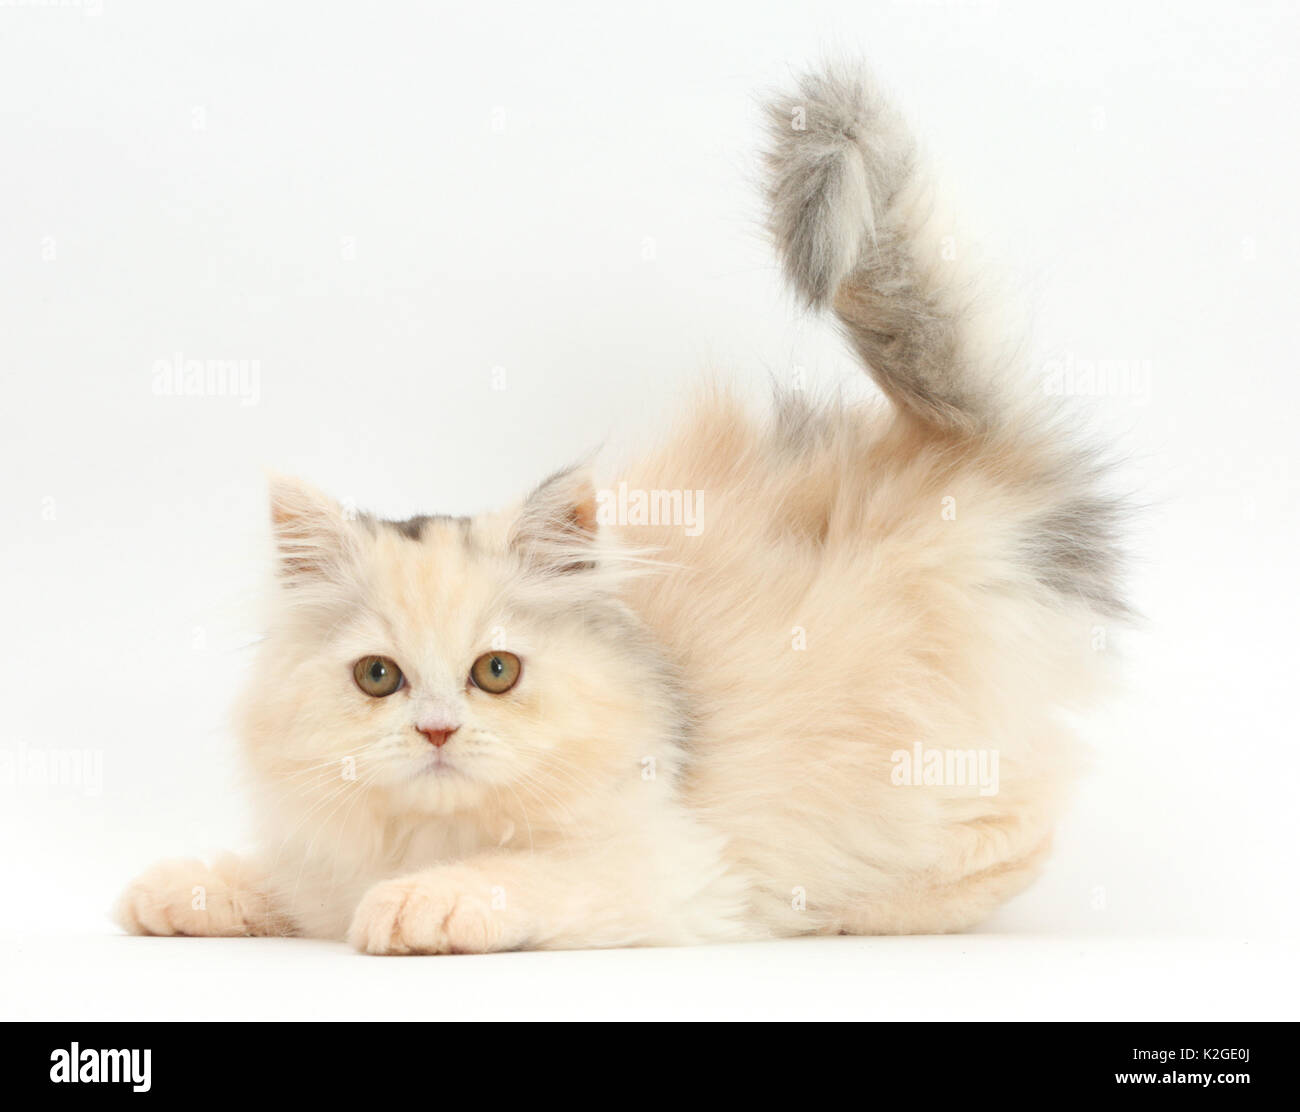 Persian kitten in playful posture. Stock Photo